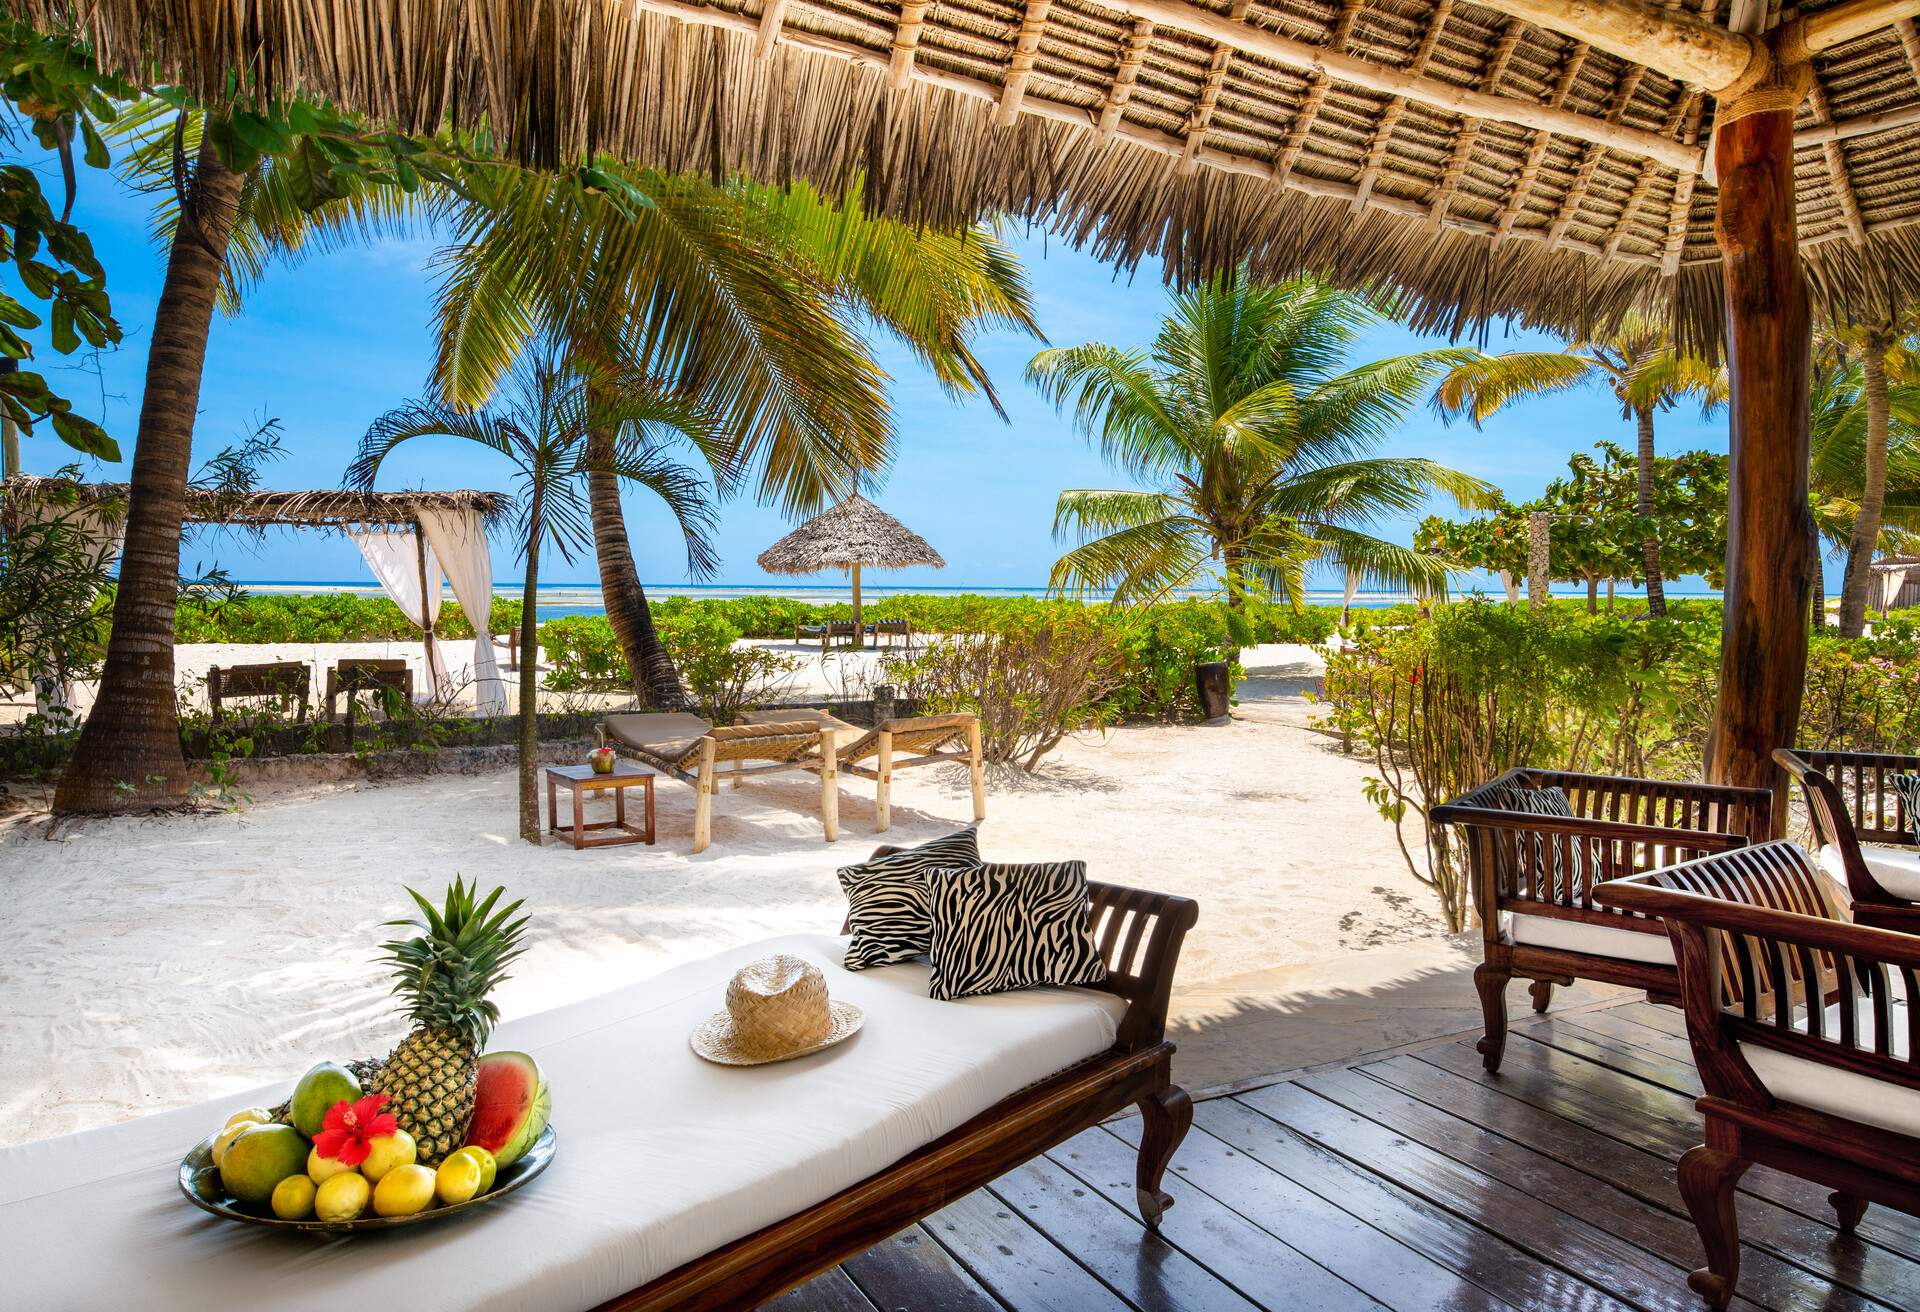 Enjoying holidays in private villa near Indian ocean (Zanzibar island, Tanzania). Property released.